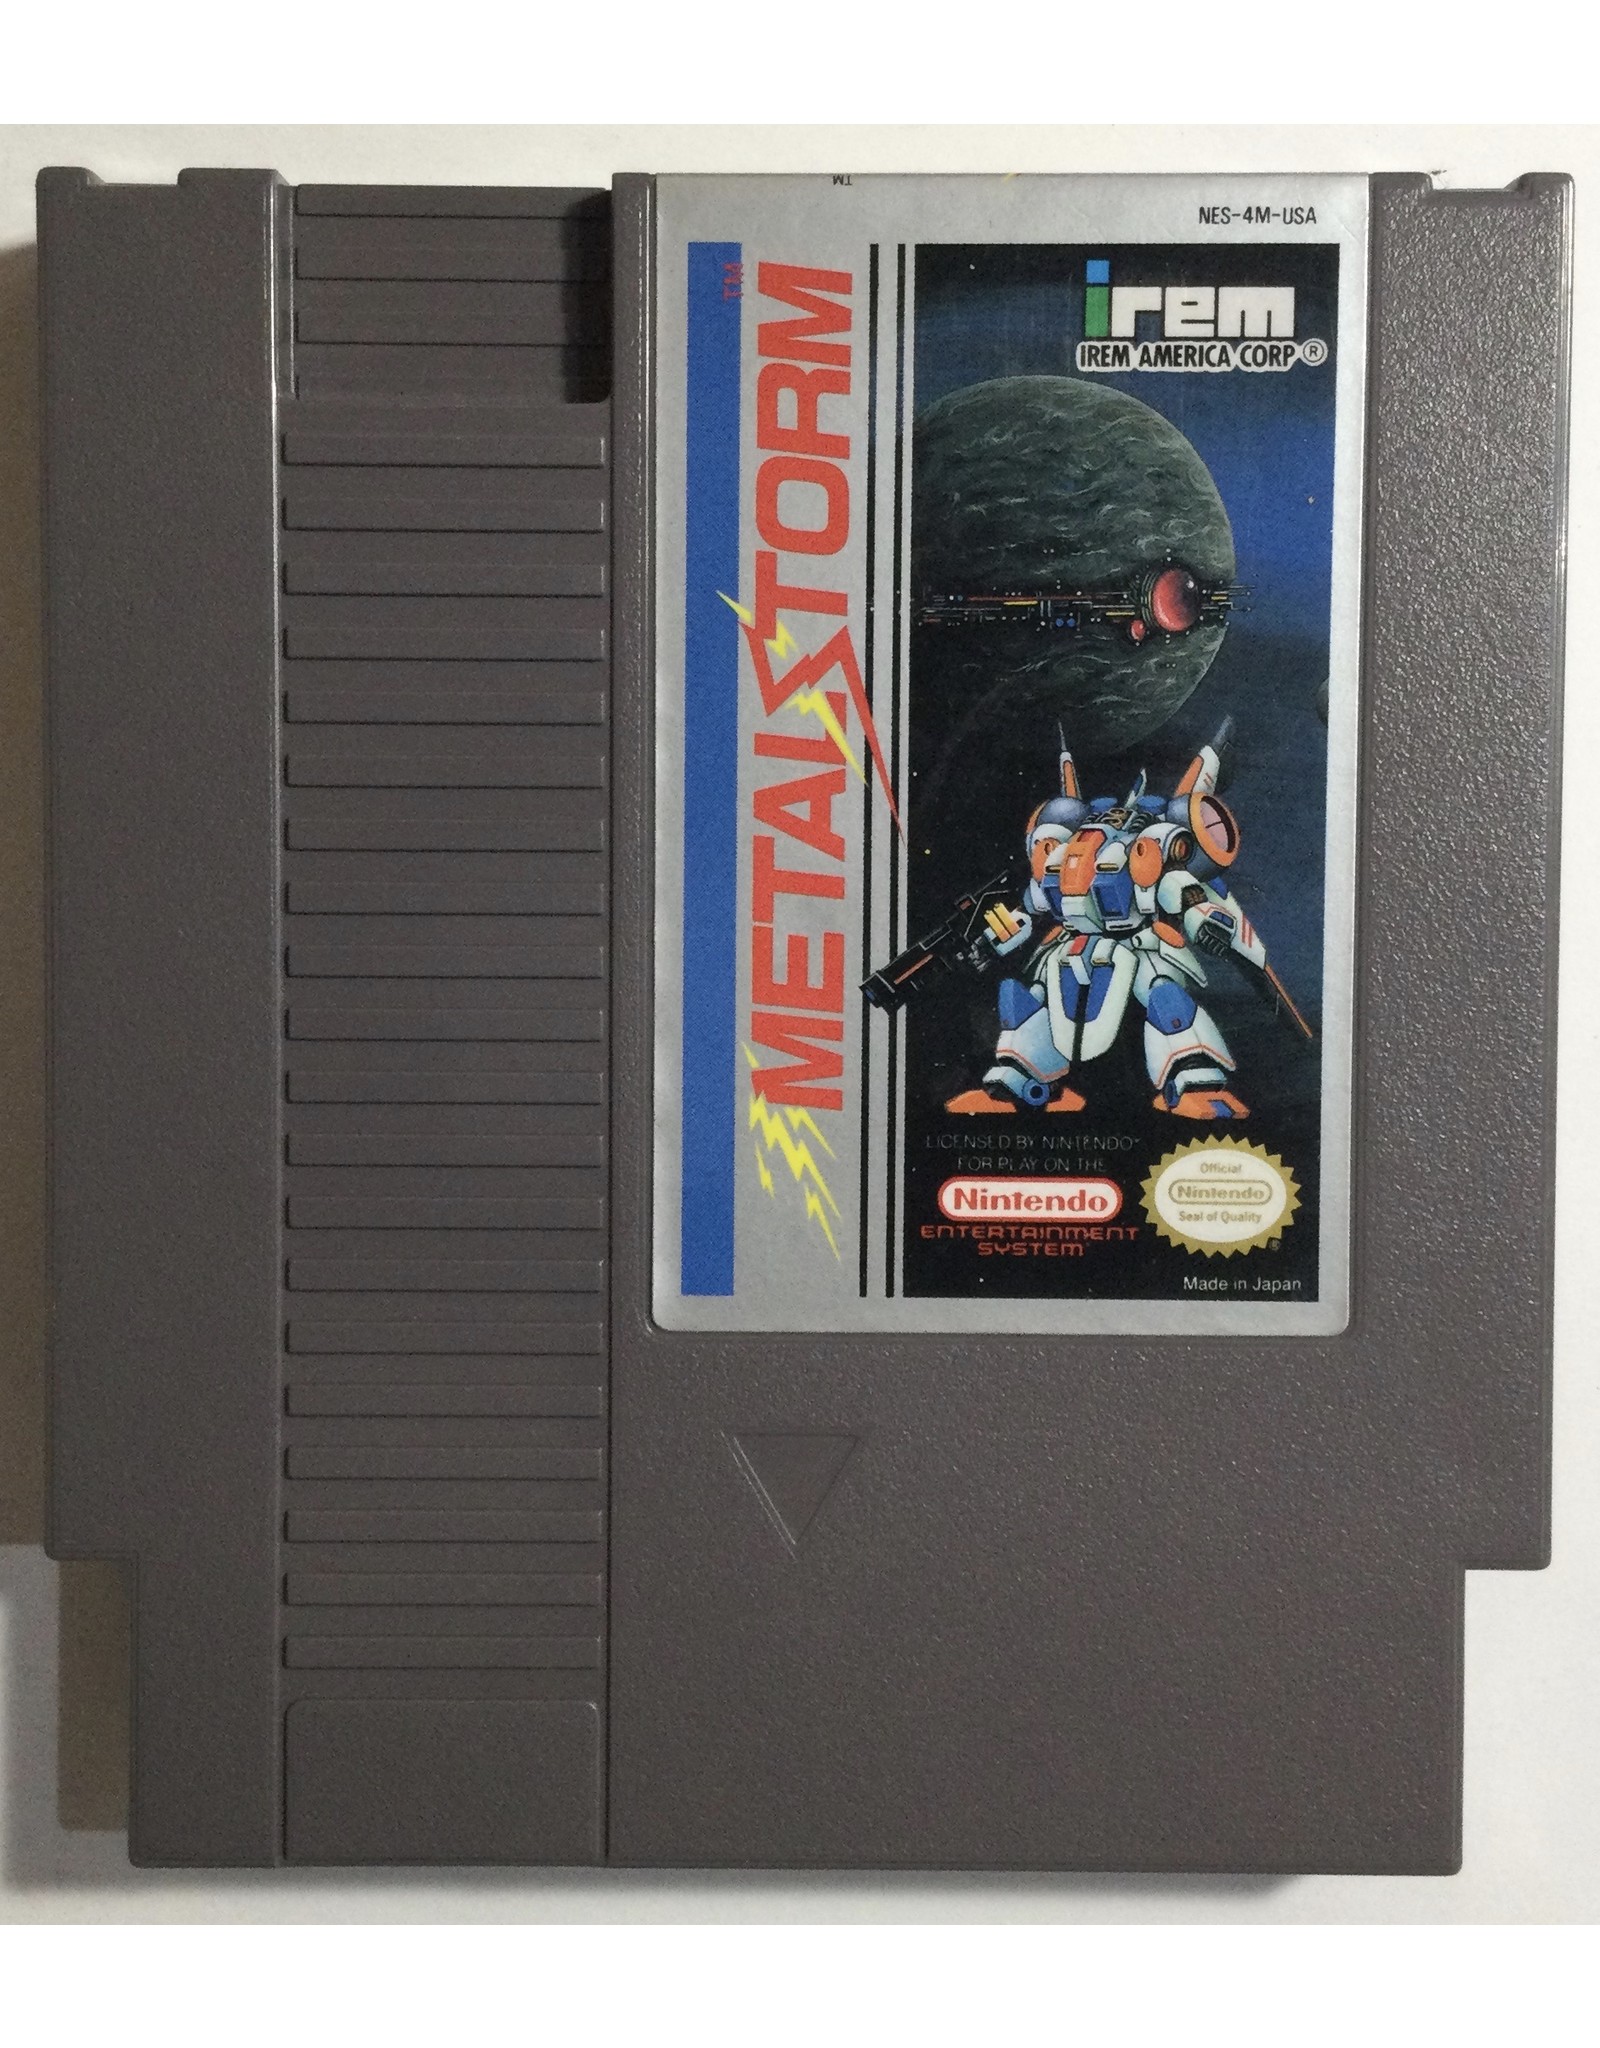 irem Metalstorm for Nintendo Entertainment system (NES)